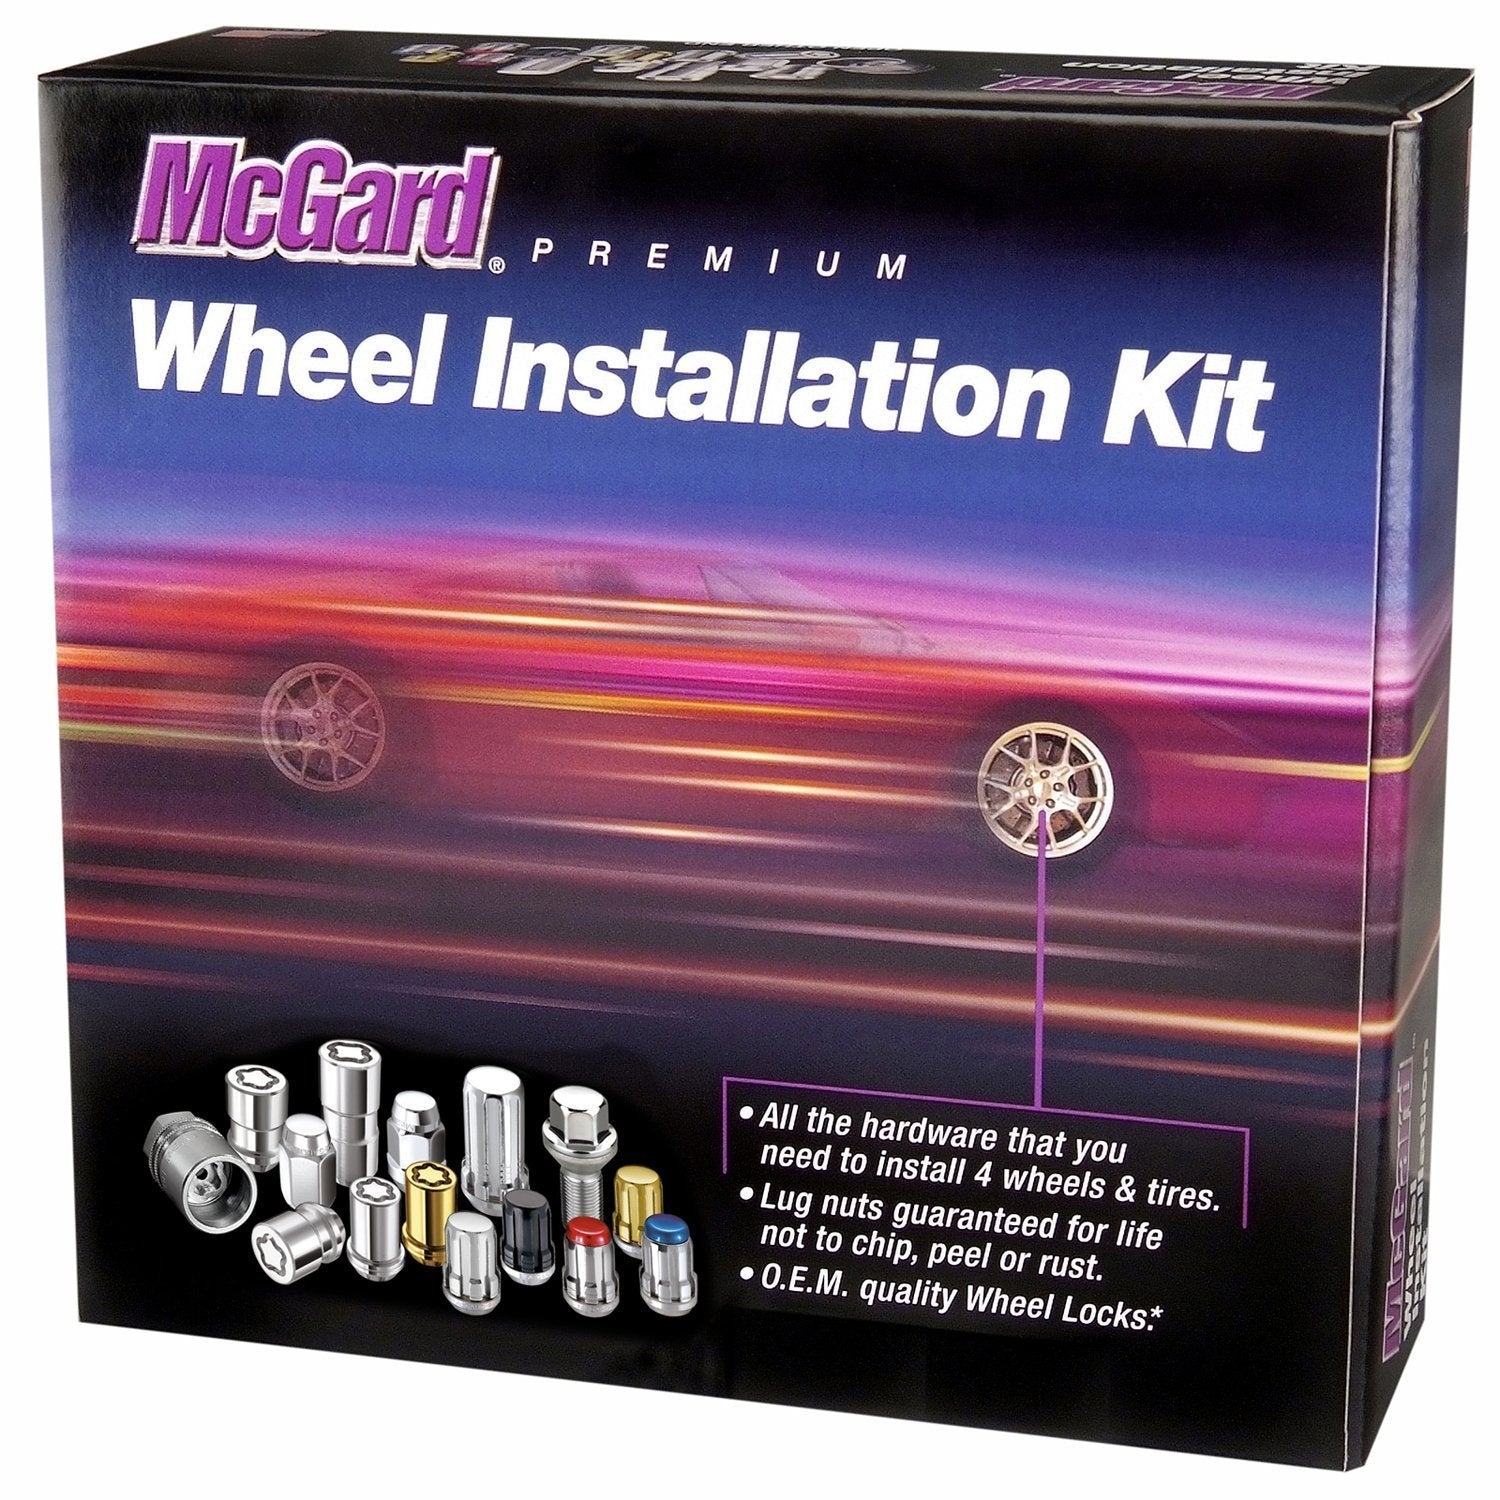 McGard, McGard Cone Seat Exposed Style Wheel Installation Kit / Chrome (84537)